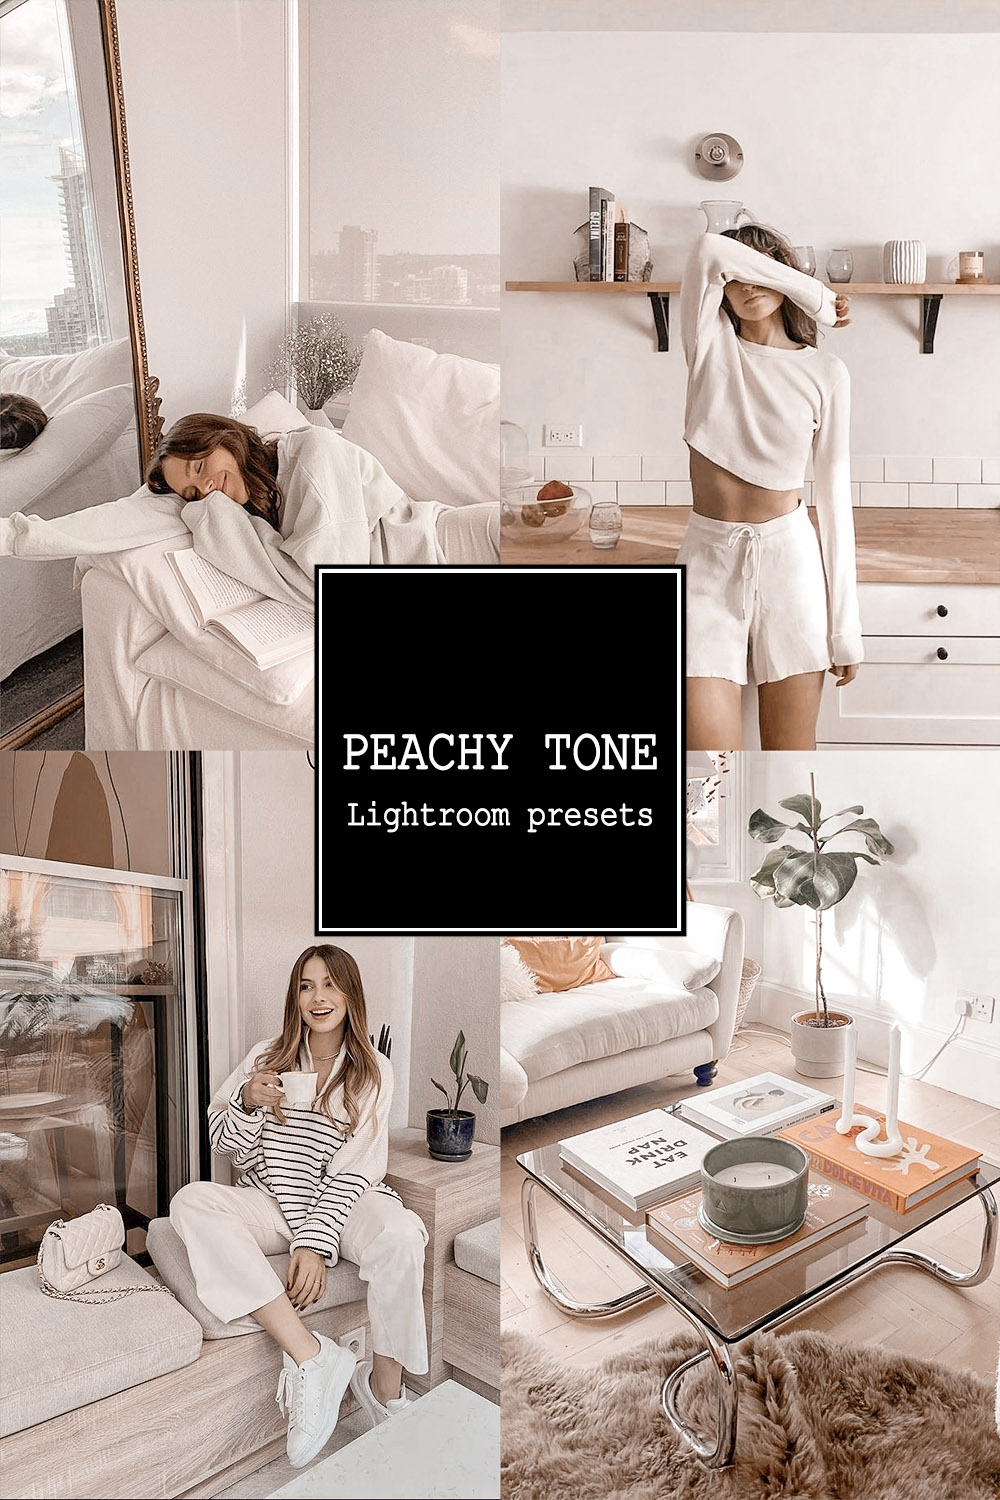 Peachy Tone Lightroom Presets pinterest image.